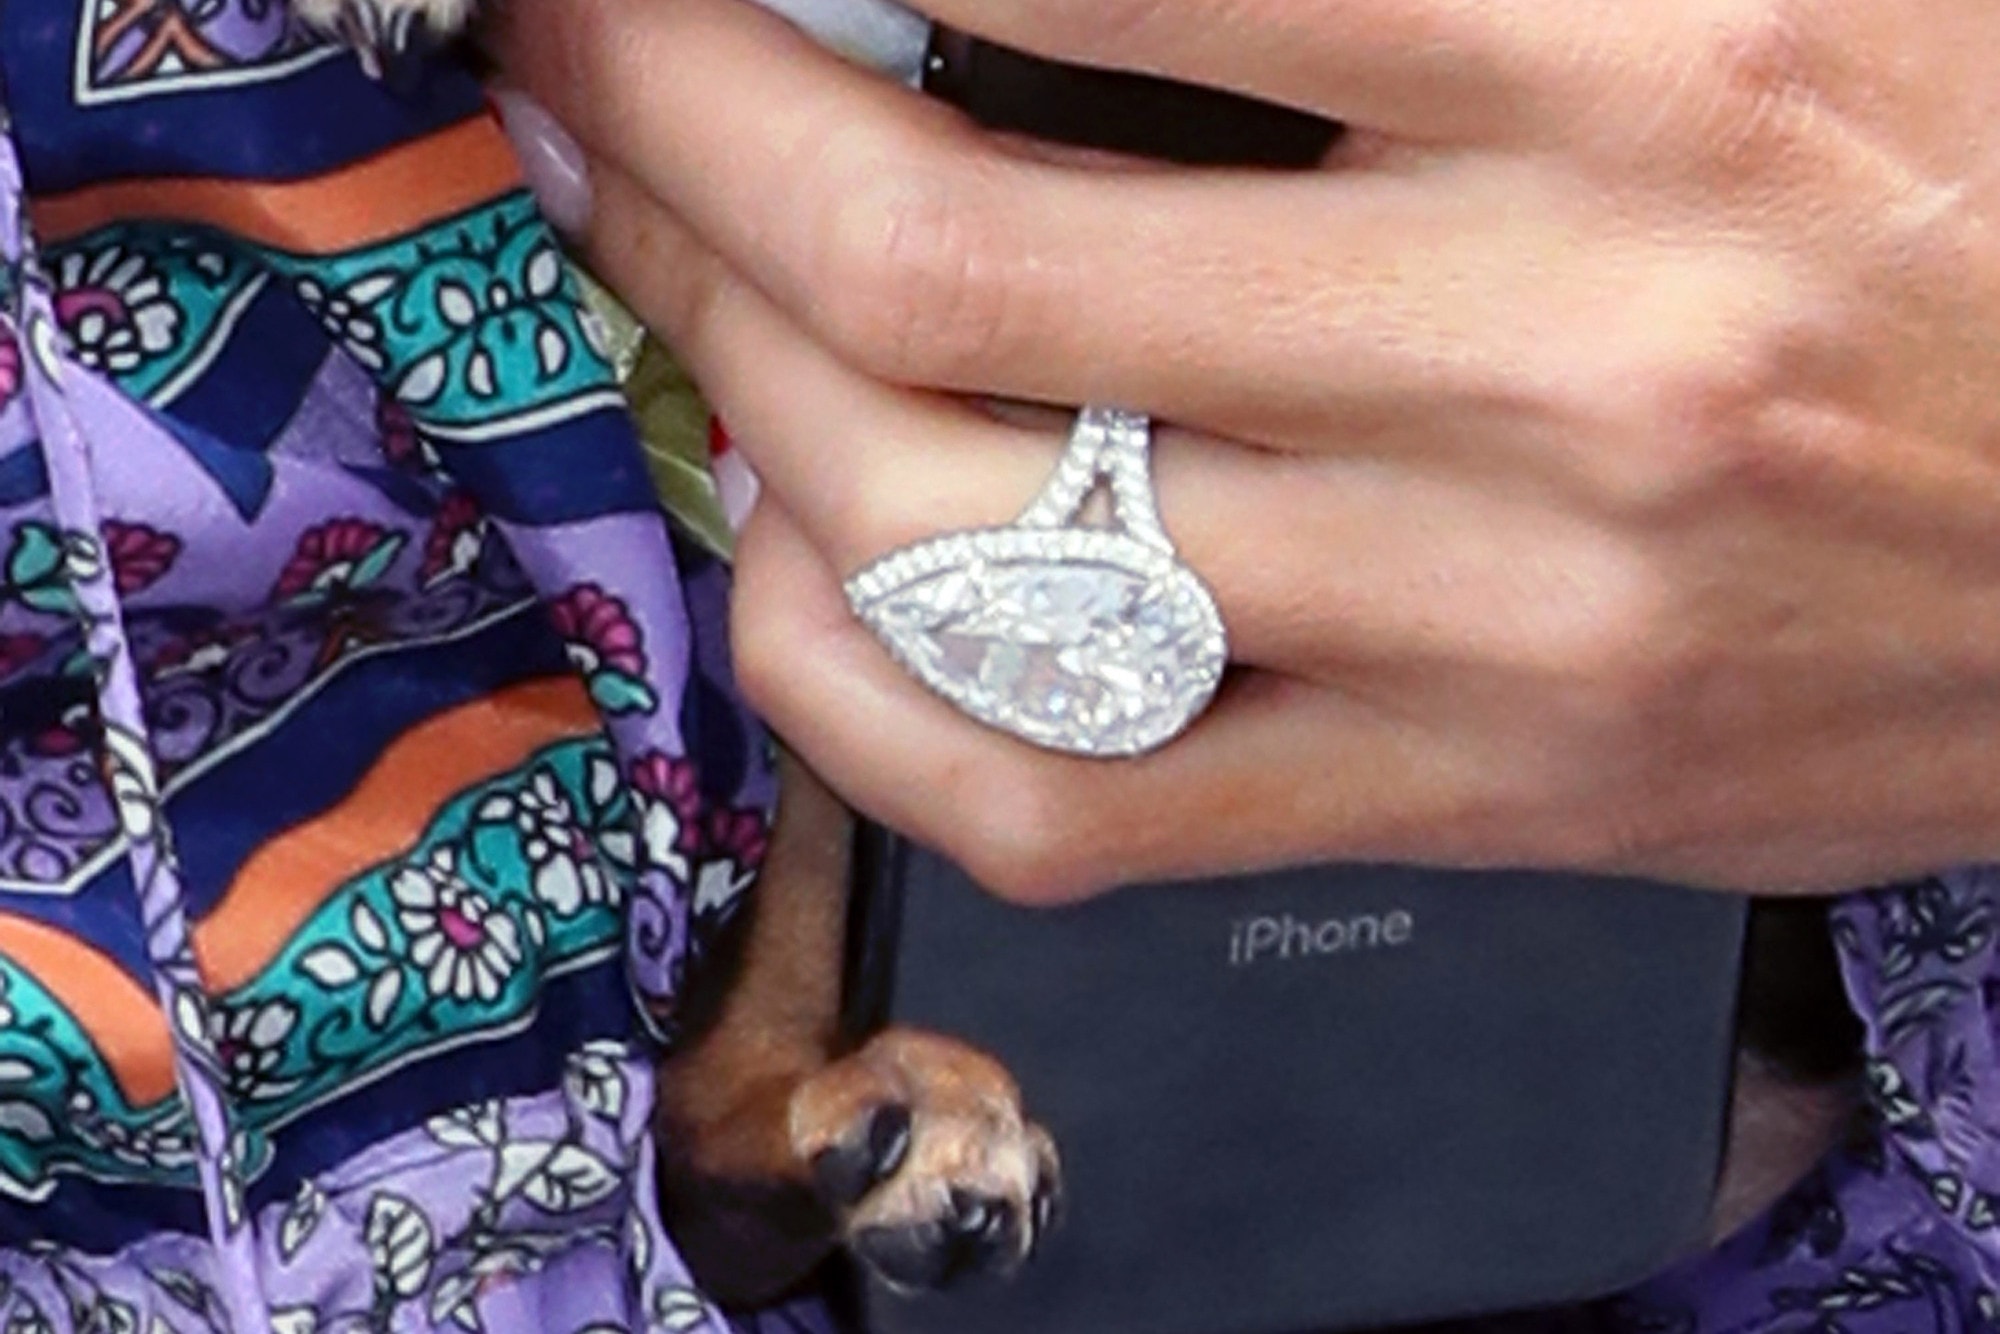 Hailey Baldwin bought Justin Bieber a custom engagement ring